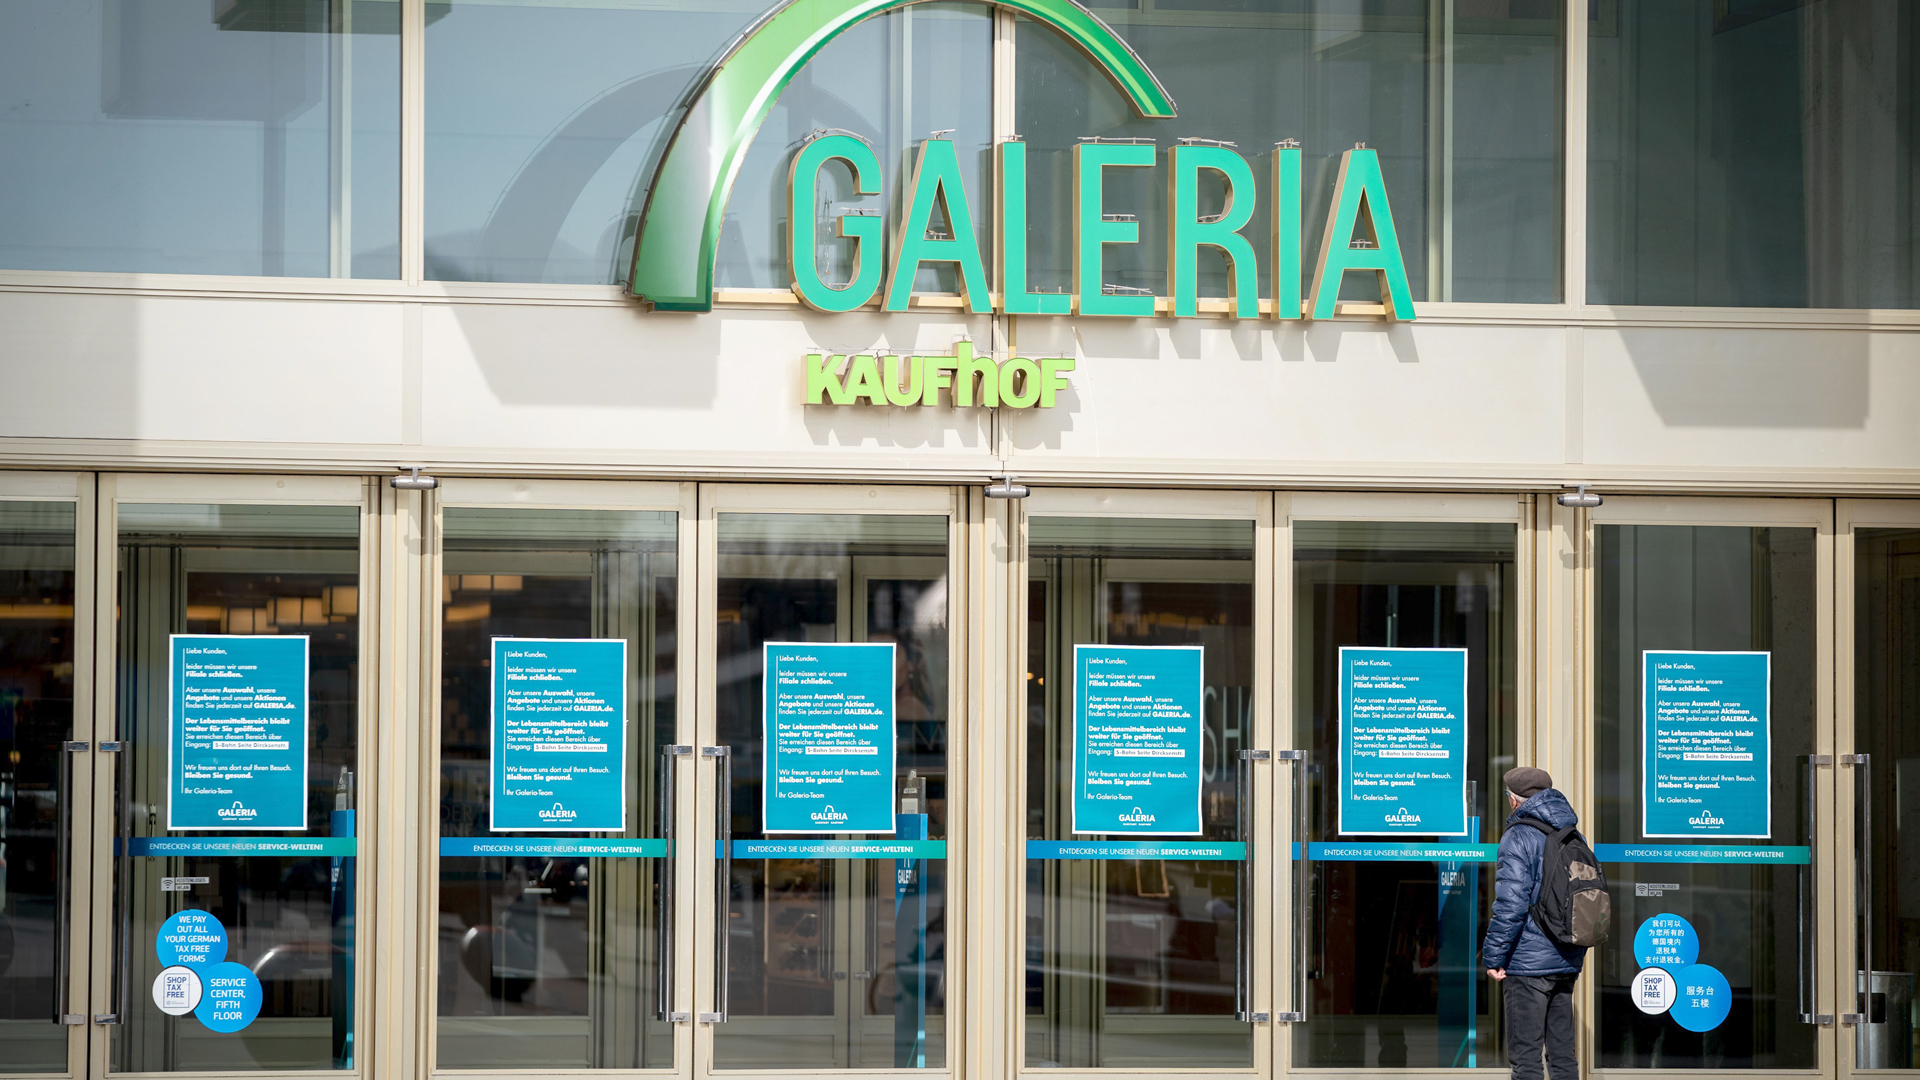 Galeria Kaufhof | dpa